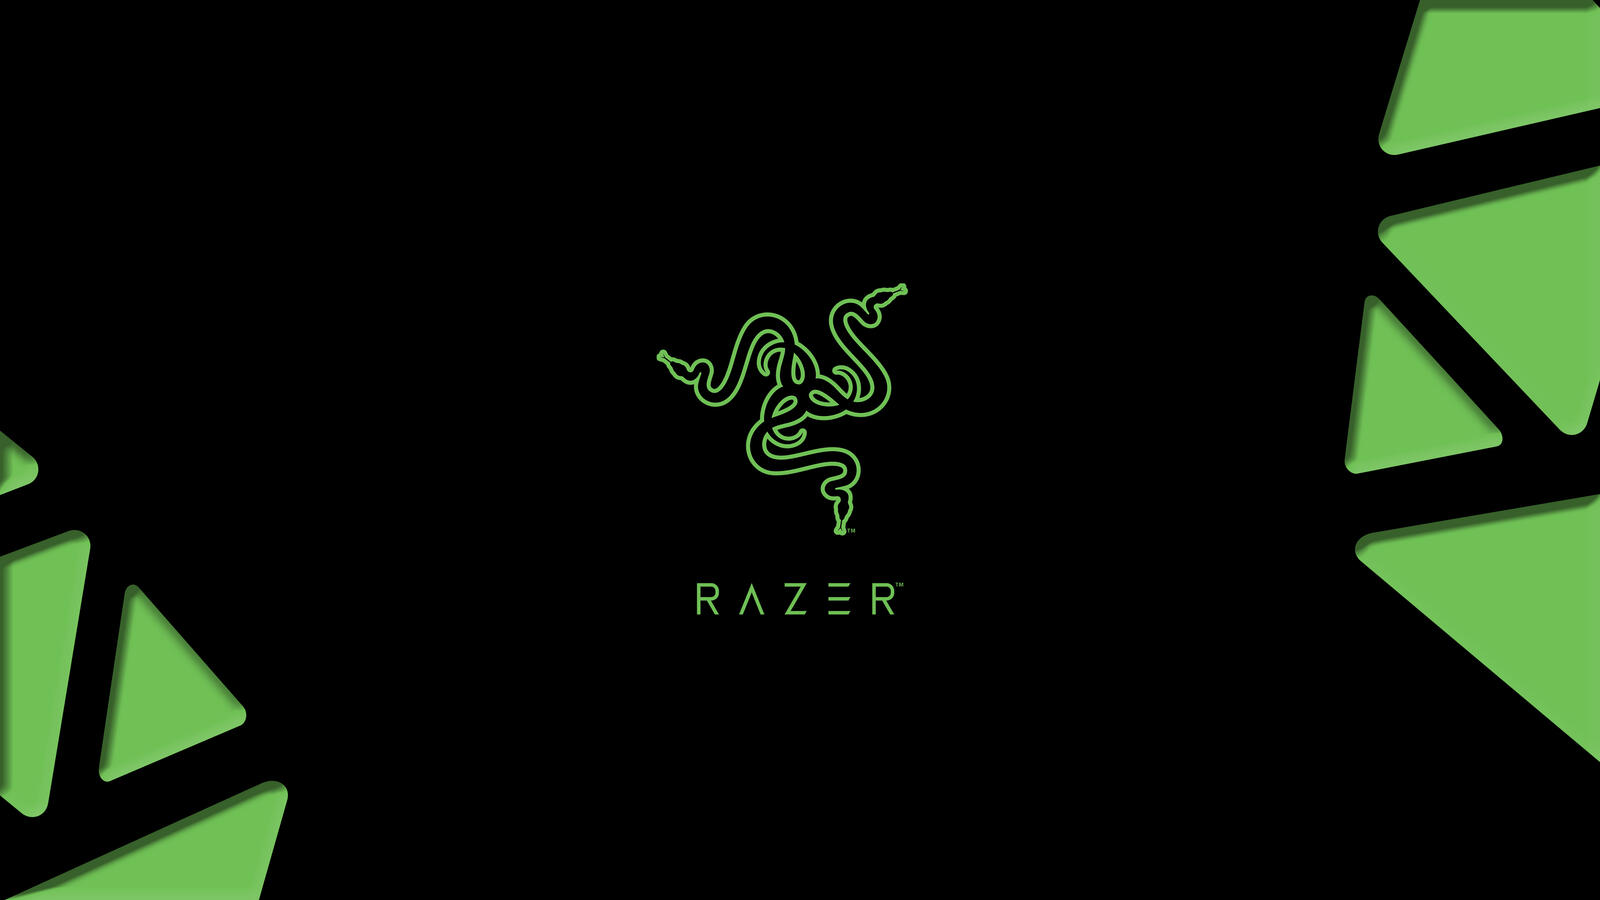 Бесплатное фото Логотип компании razer